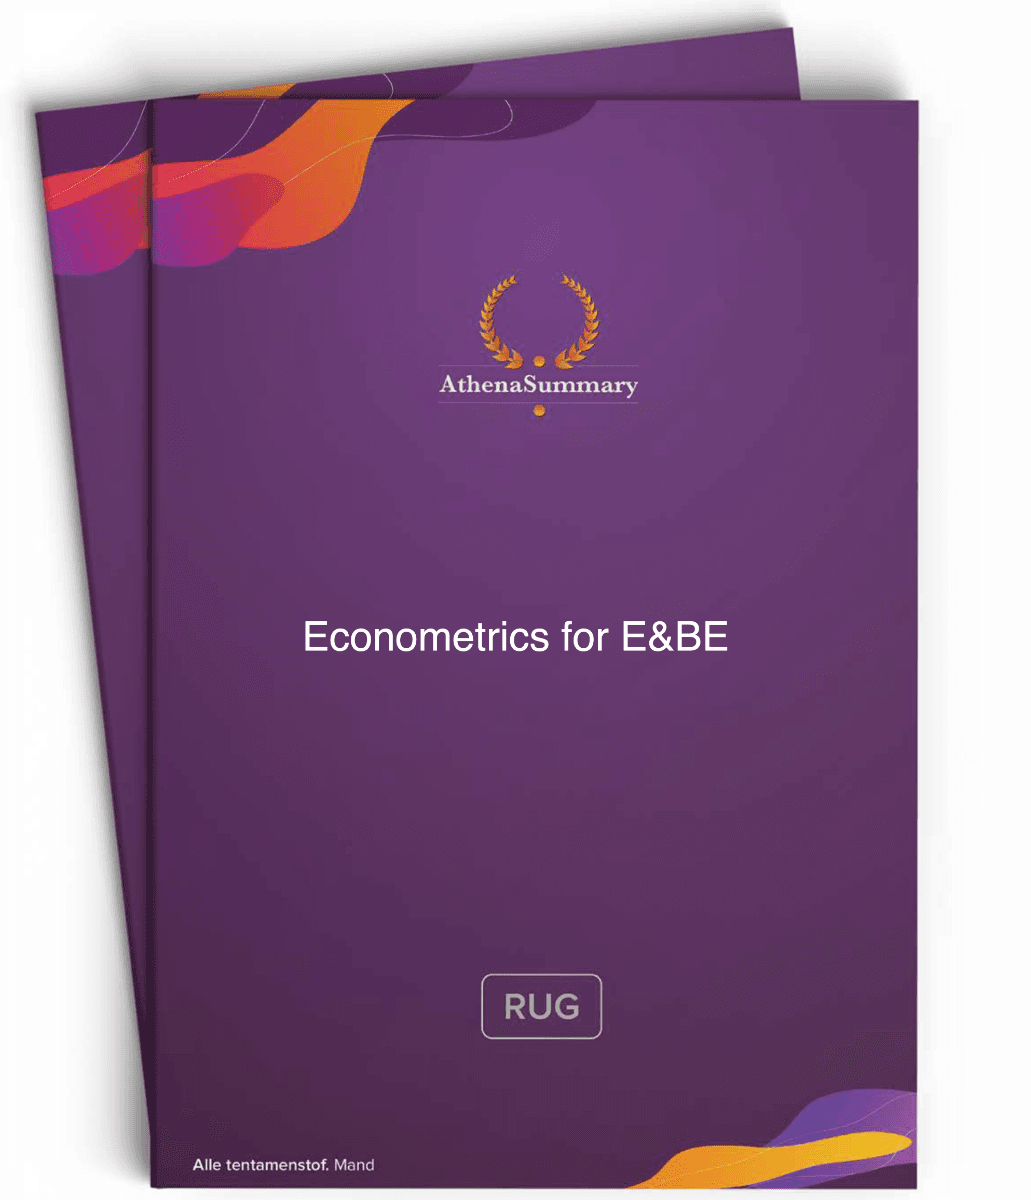 Literature Summary - Econometrics for E&BE